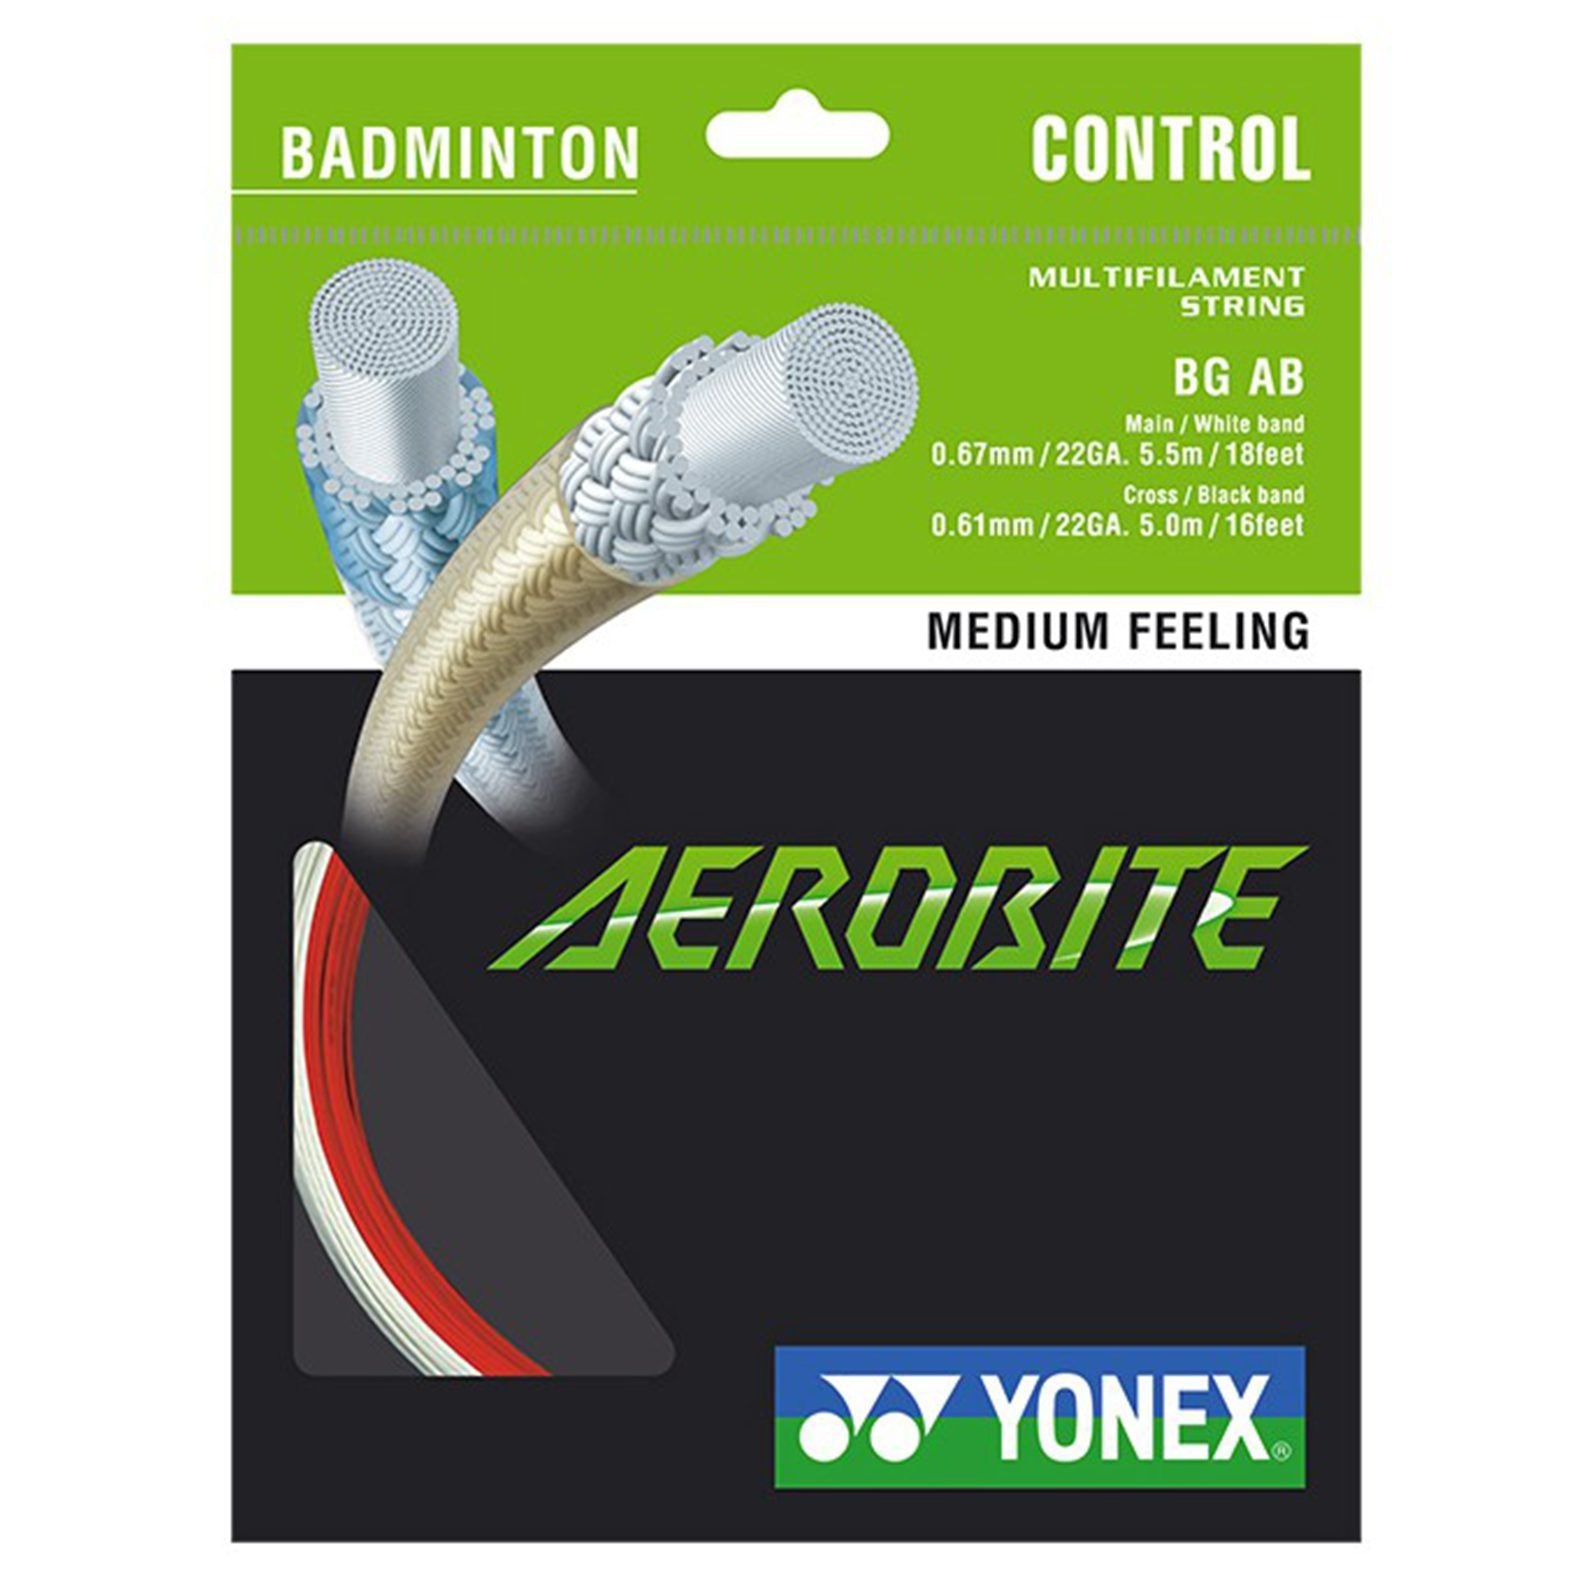 Yonex Aerobite Badminton String - atr-sports